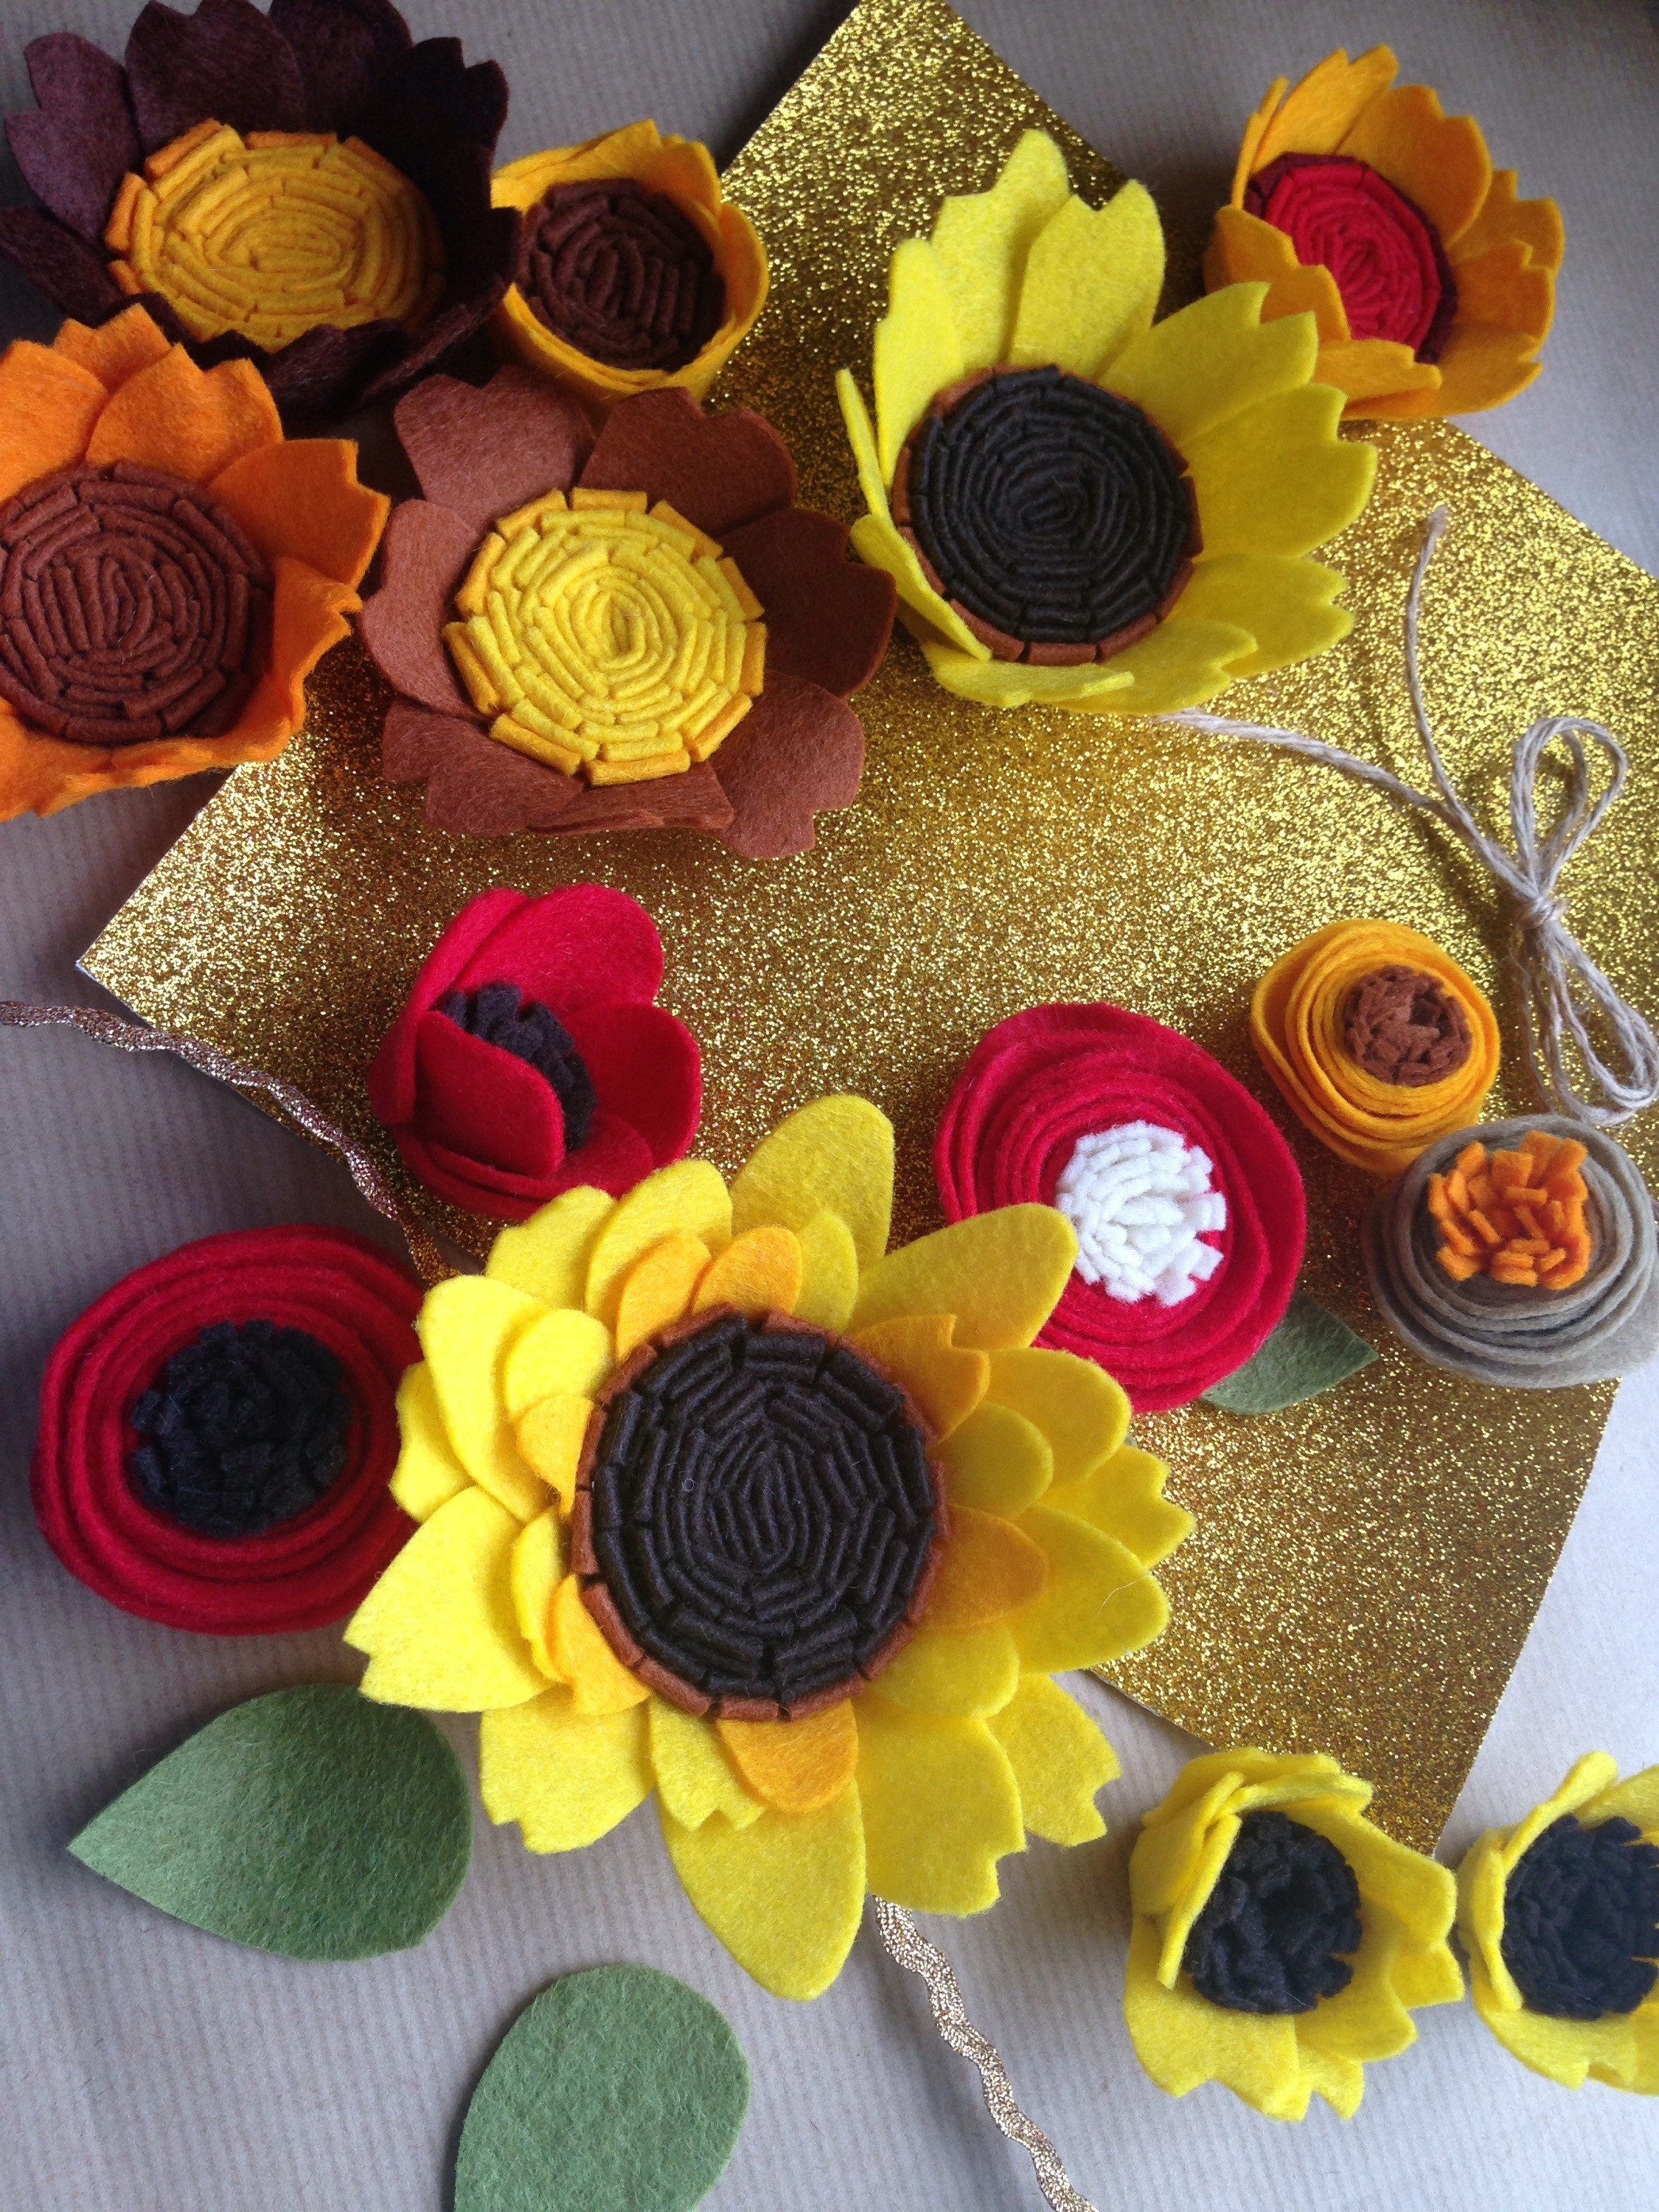 Best ideas about DIY Felt Flowers
. Save or Pin DIY felt flowers SUNFLOWER – The Crafty Mummy Now.